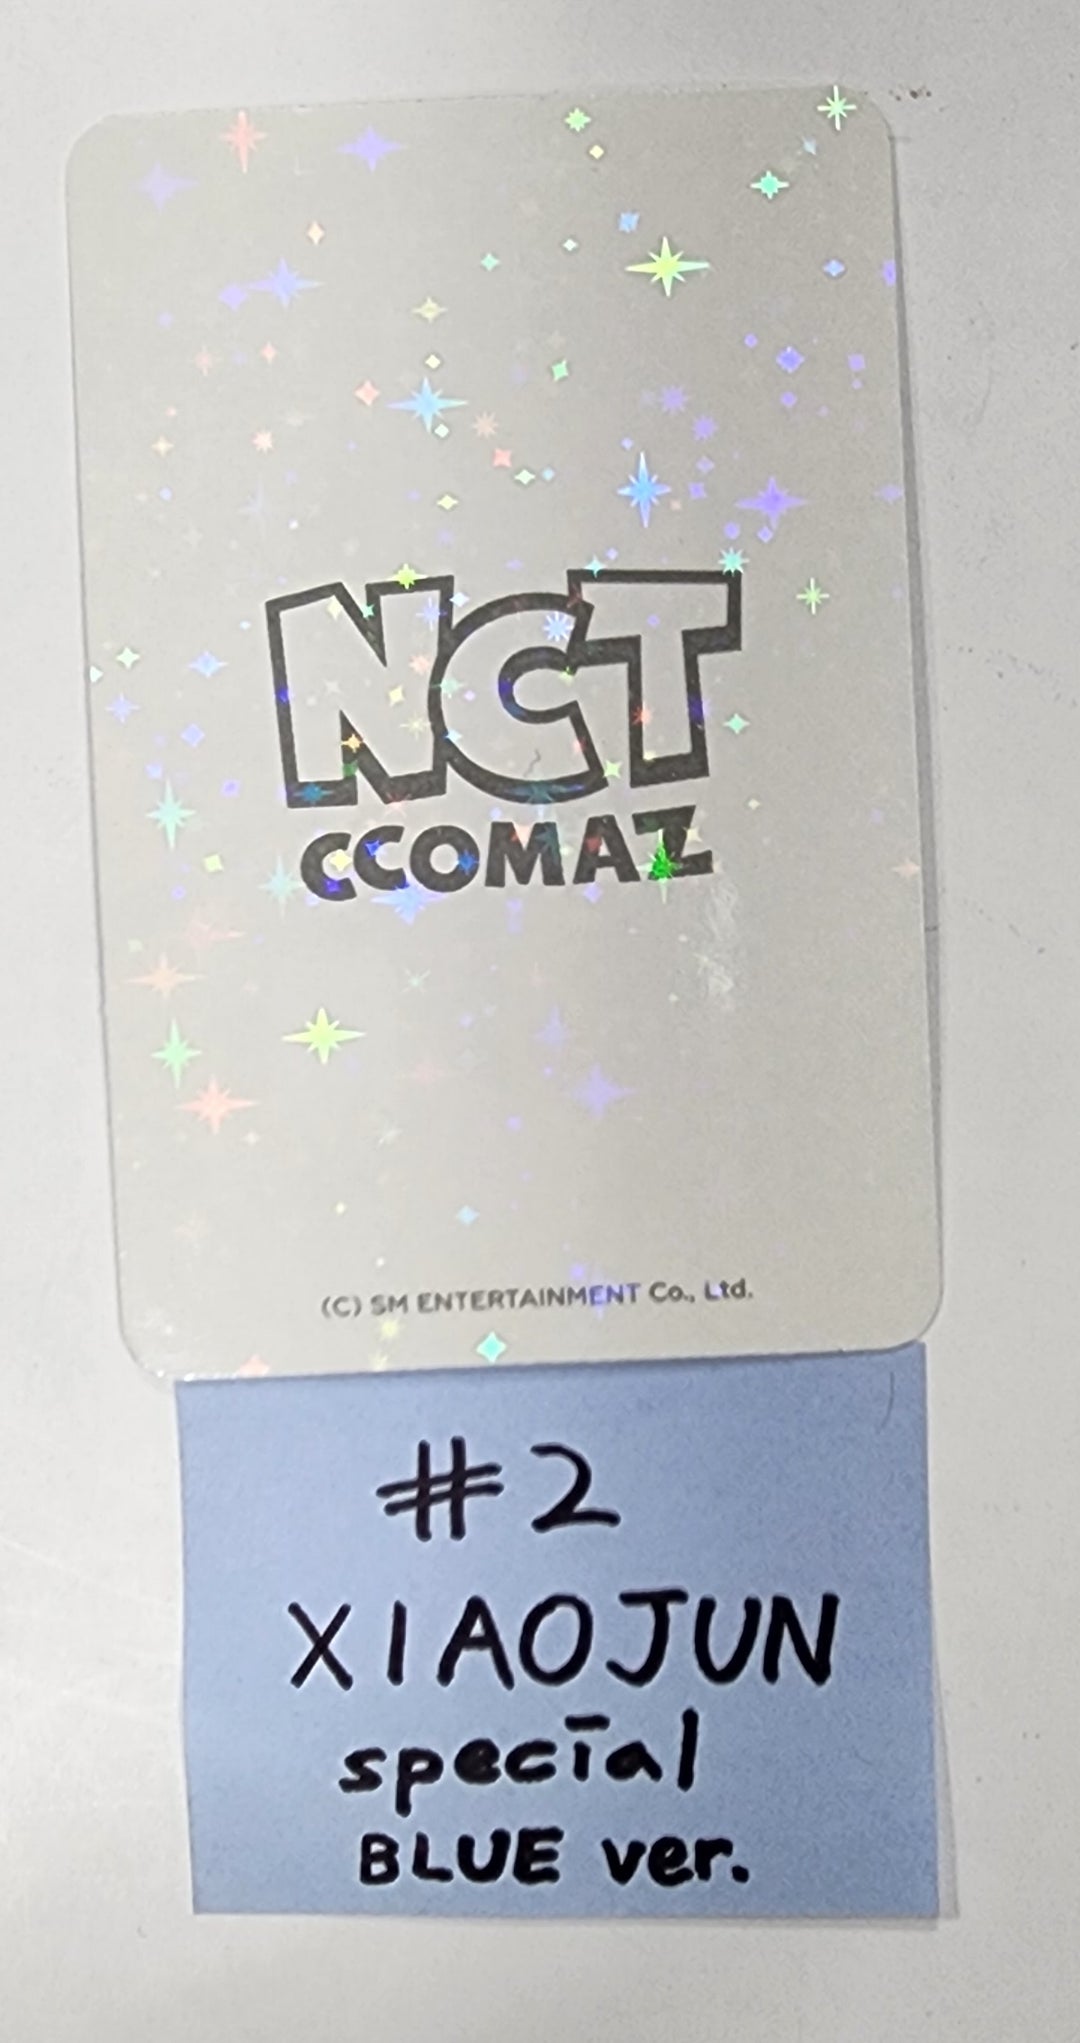 NCT "CCOMAZ" - Trading Special Hologram Photocard